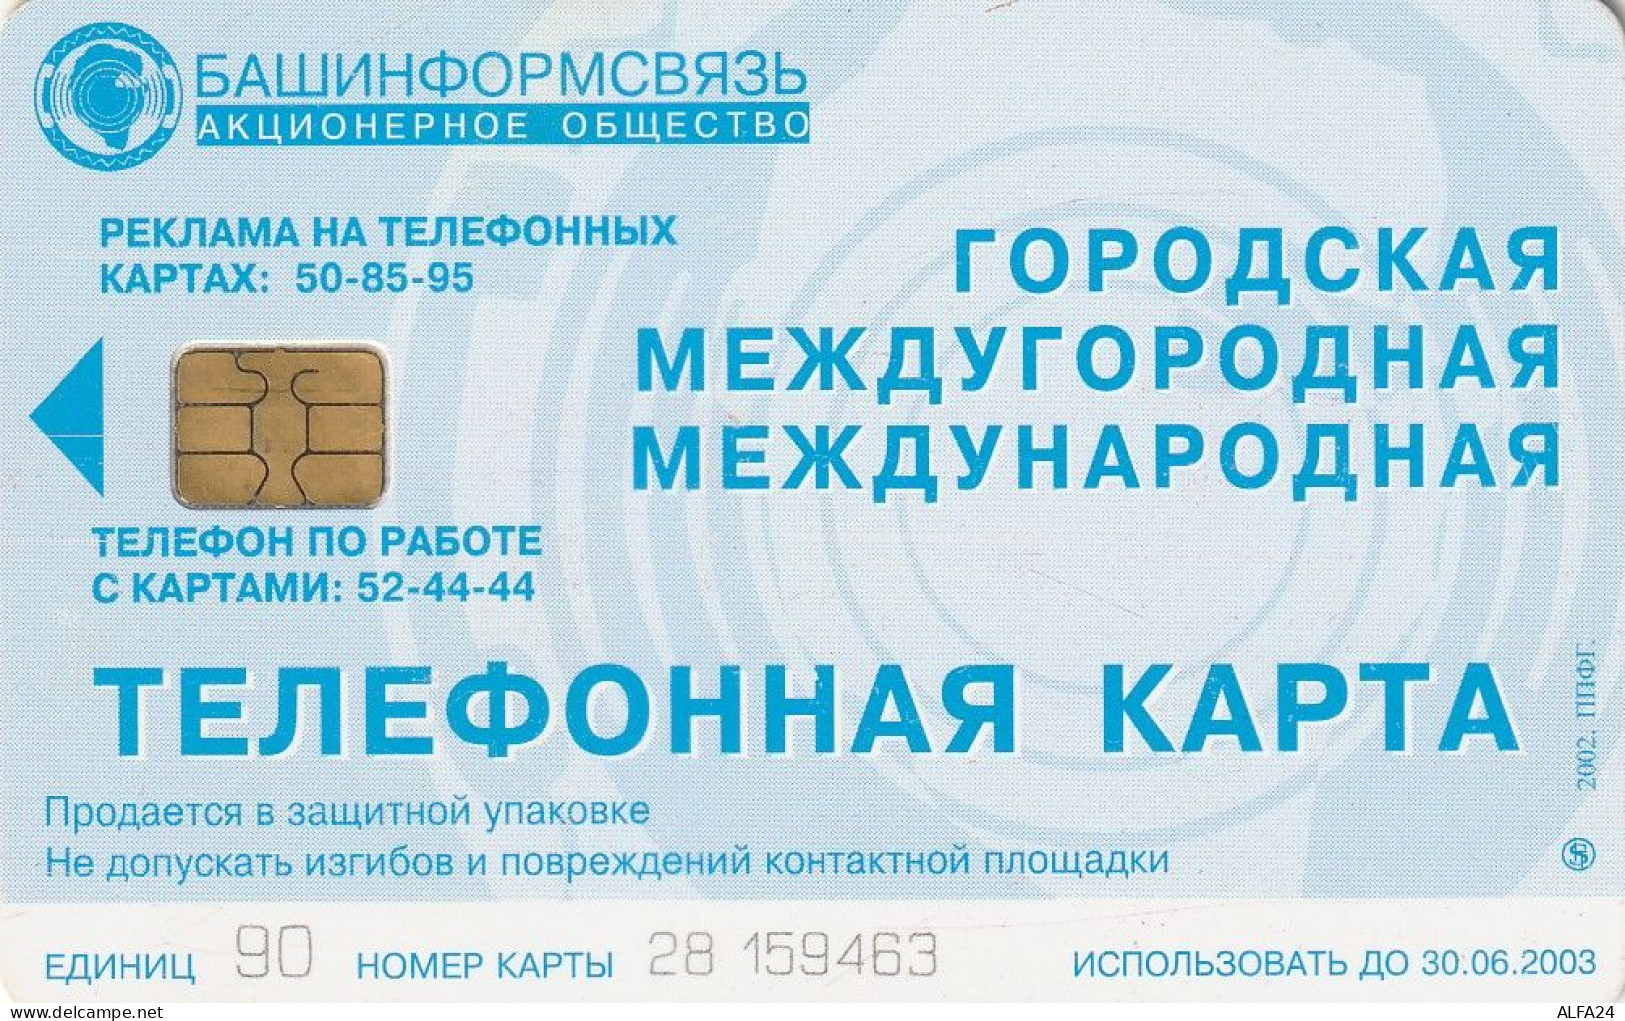 PHONE CARD RUSSIA Bashinformsvyaz - Ufa (E10.4.6 - Russia